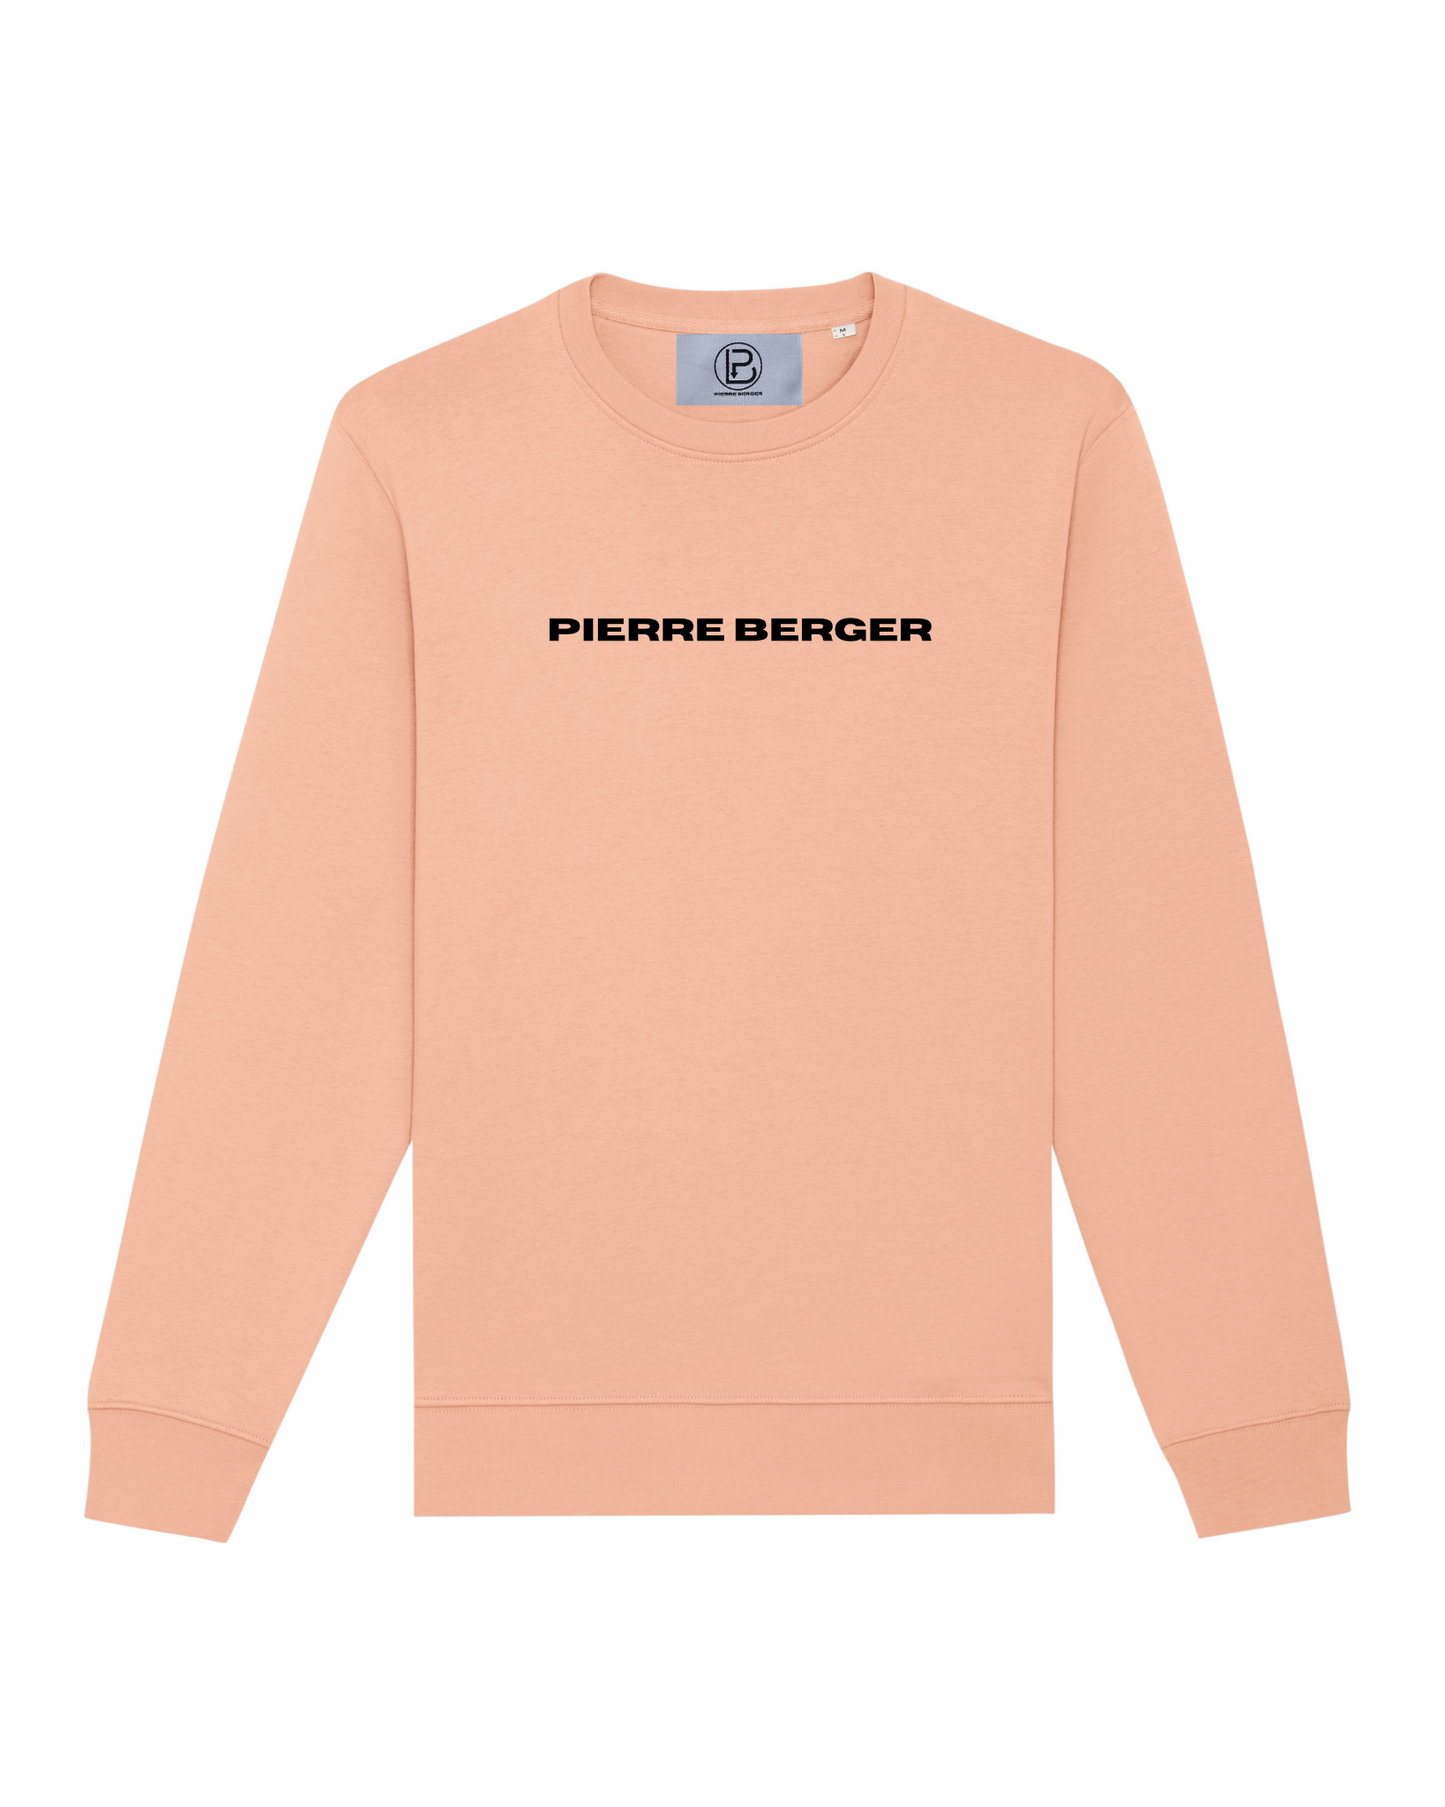 PIERRE BERGER - Unisex crew neck sweatshirt 100% recycled